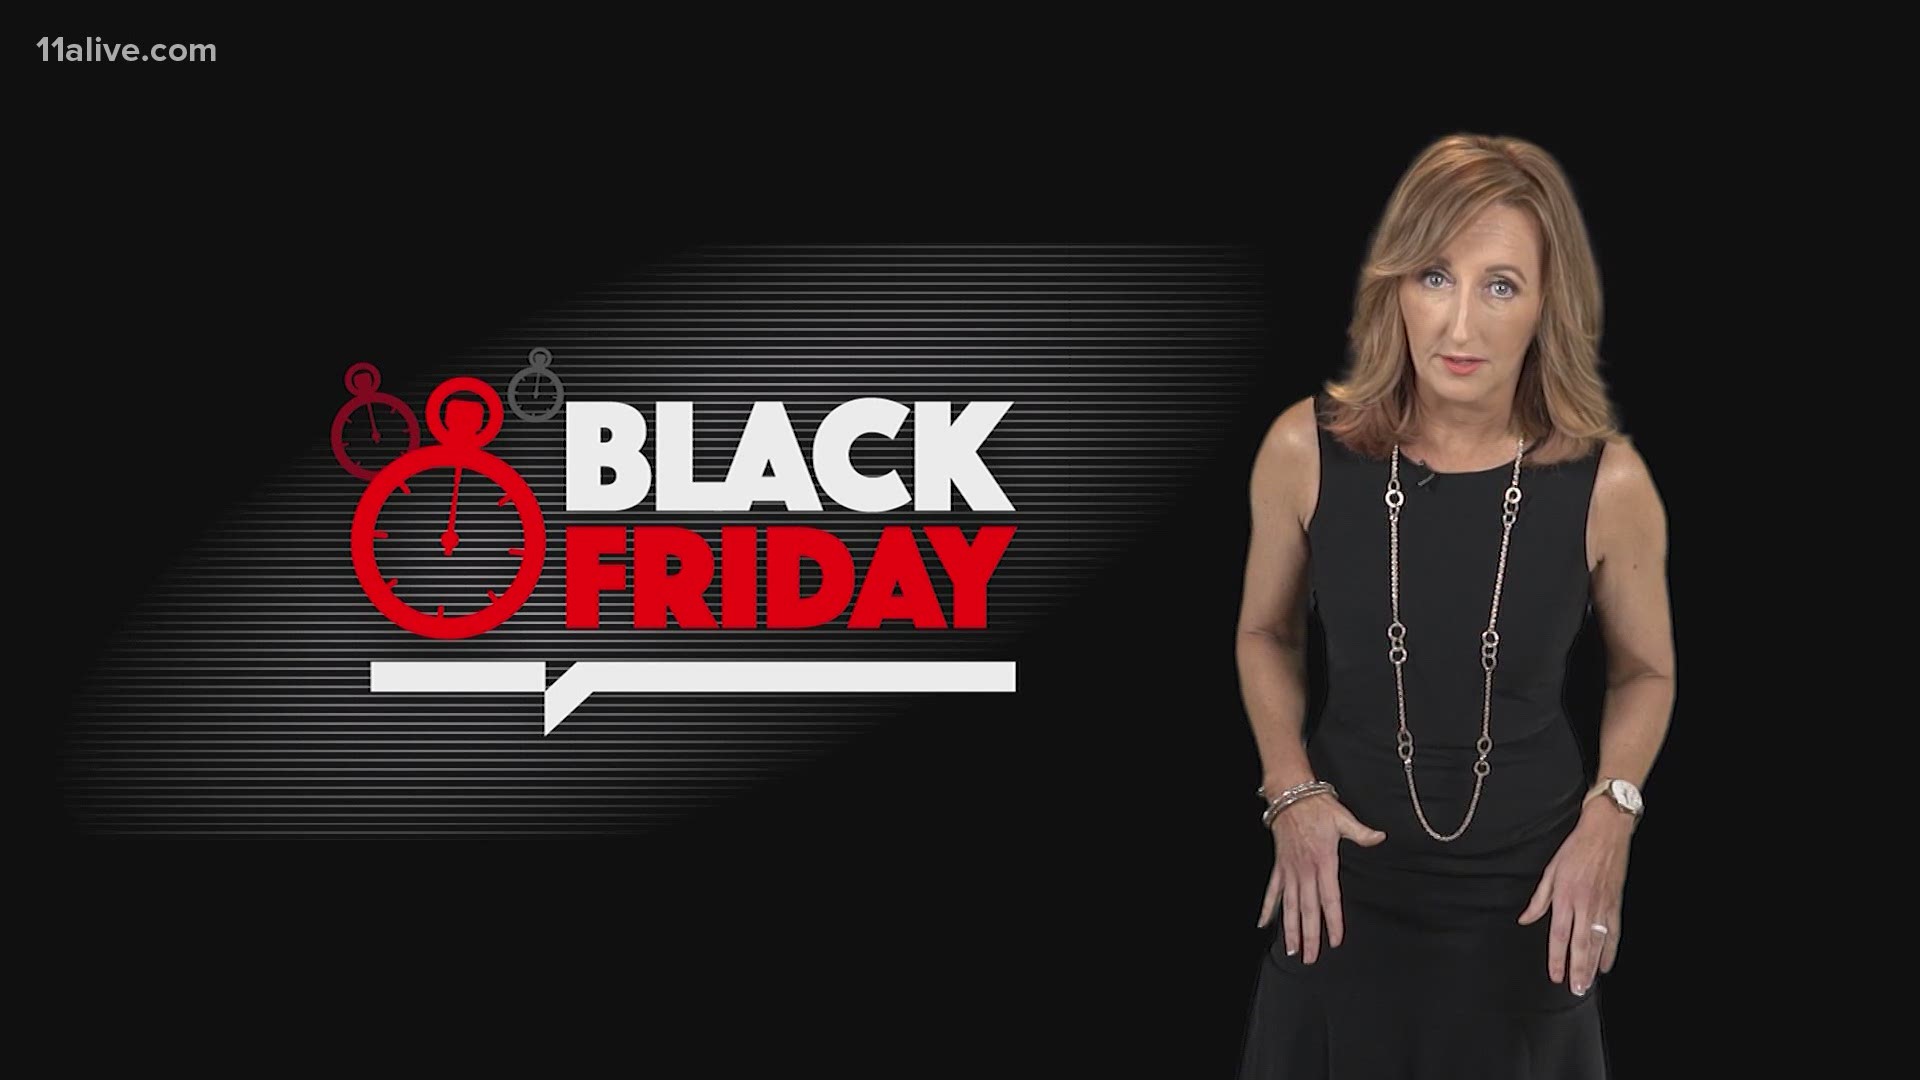 Target Black Friday ad 2020 deals kick off Sunday | www.semadata.org